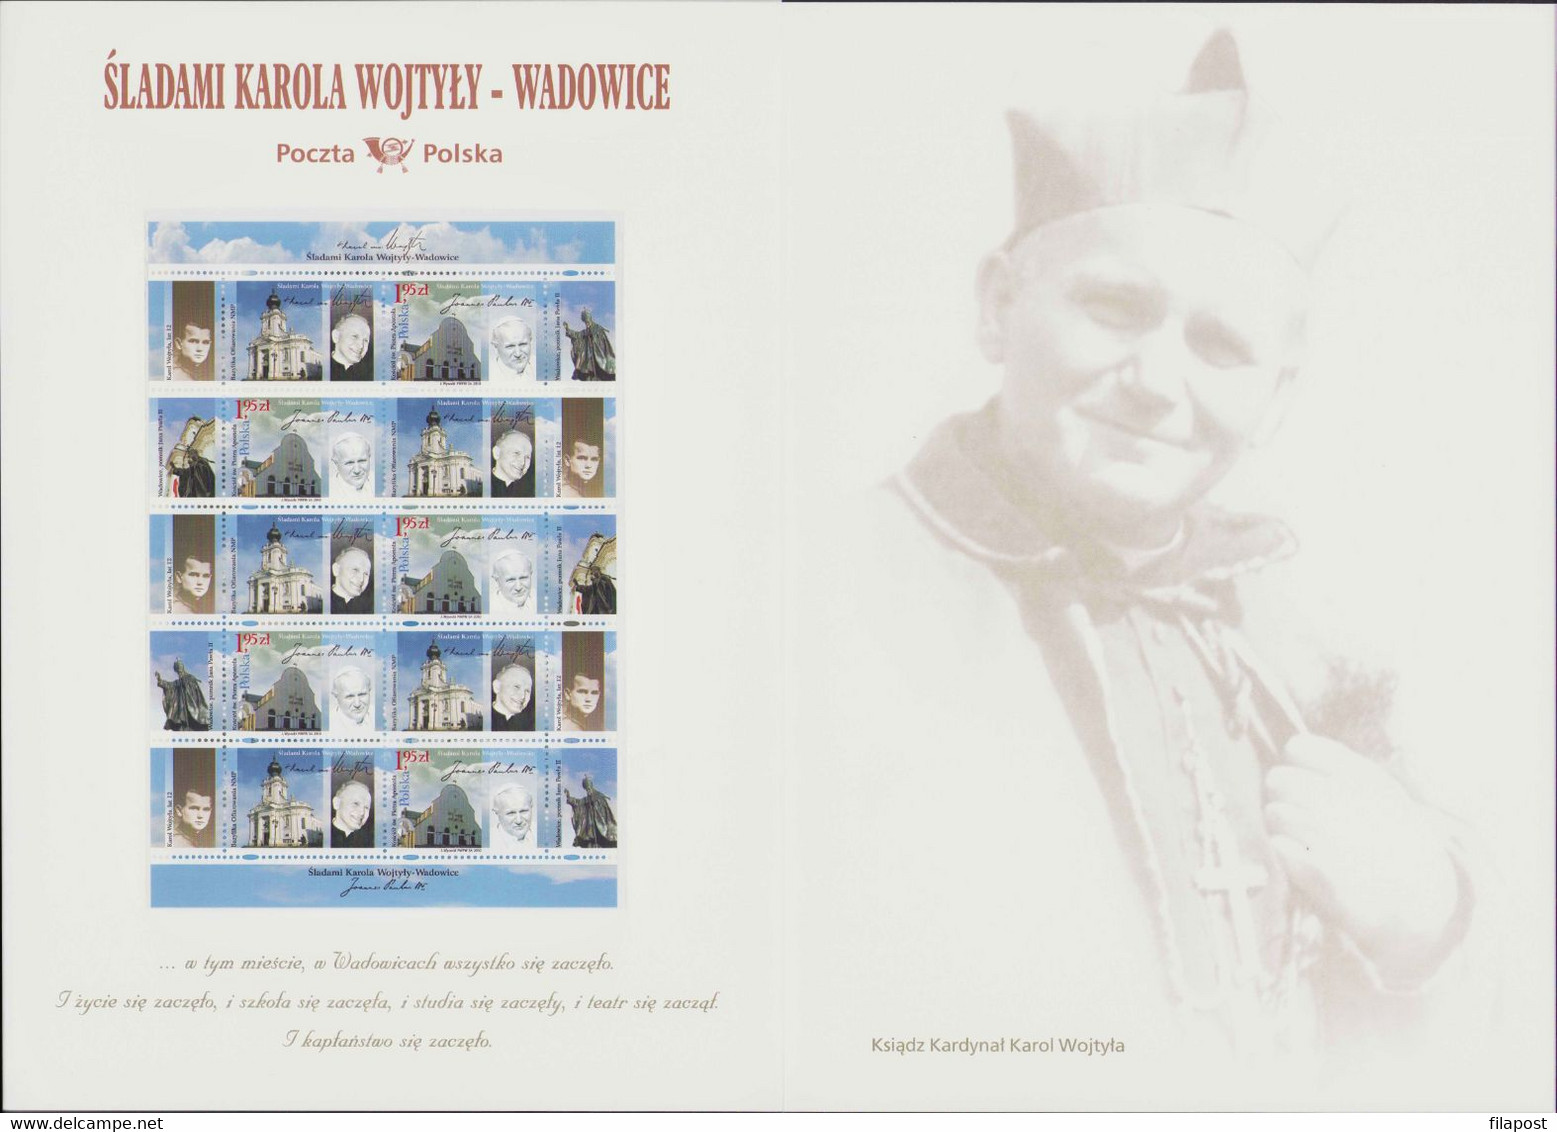 Poland 2010 Mi 4484 Souvenir Booklet / In The Steps Of Karol Wojtyla - Wadowice, Pope John Paul II / Full Sheet MNH**FV - Francobolli In Bobina